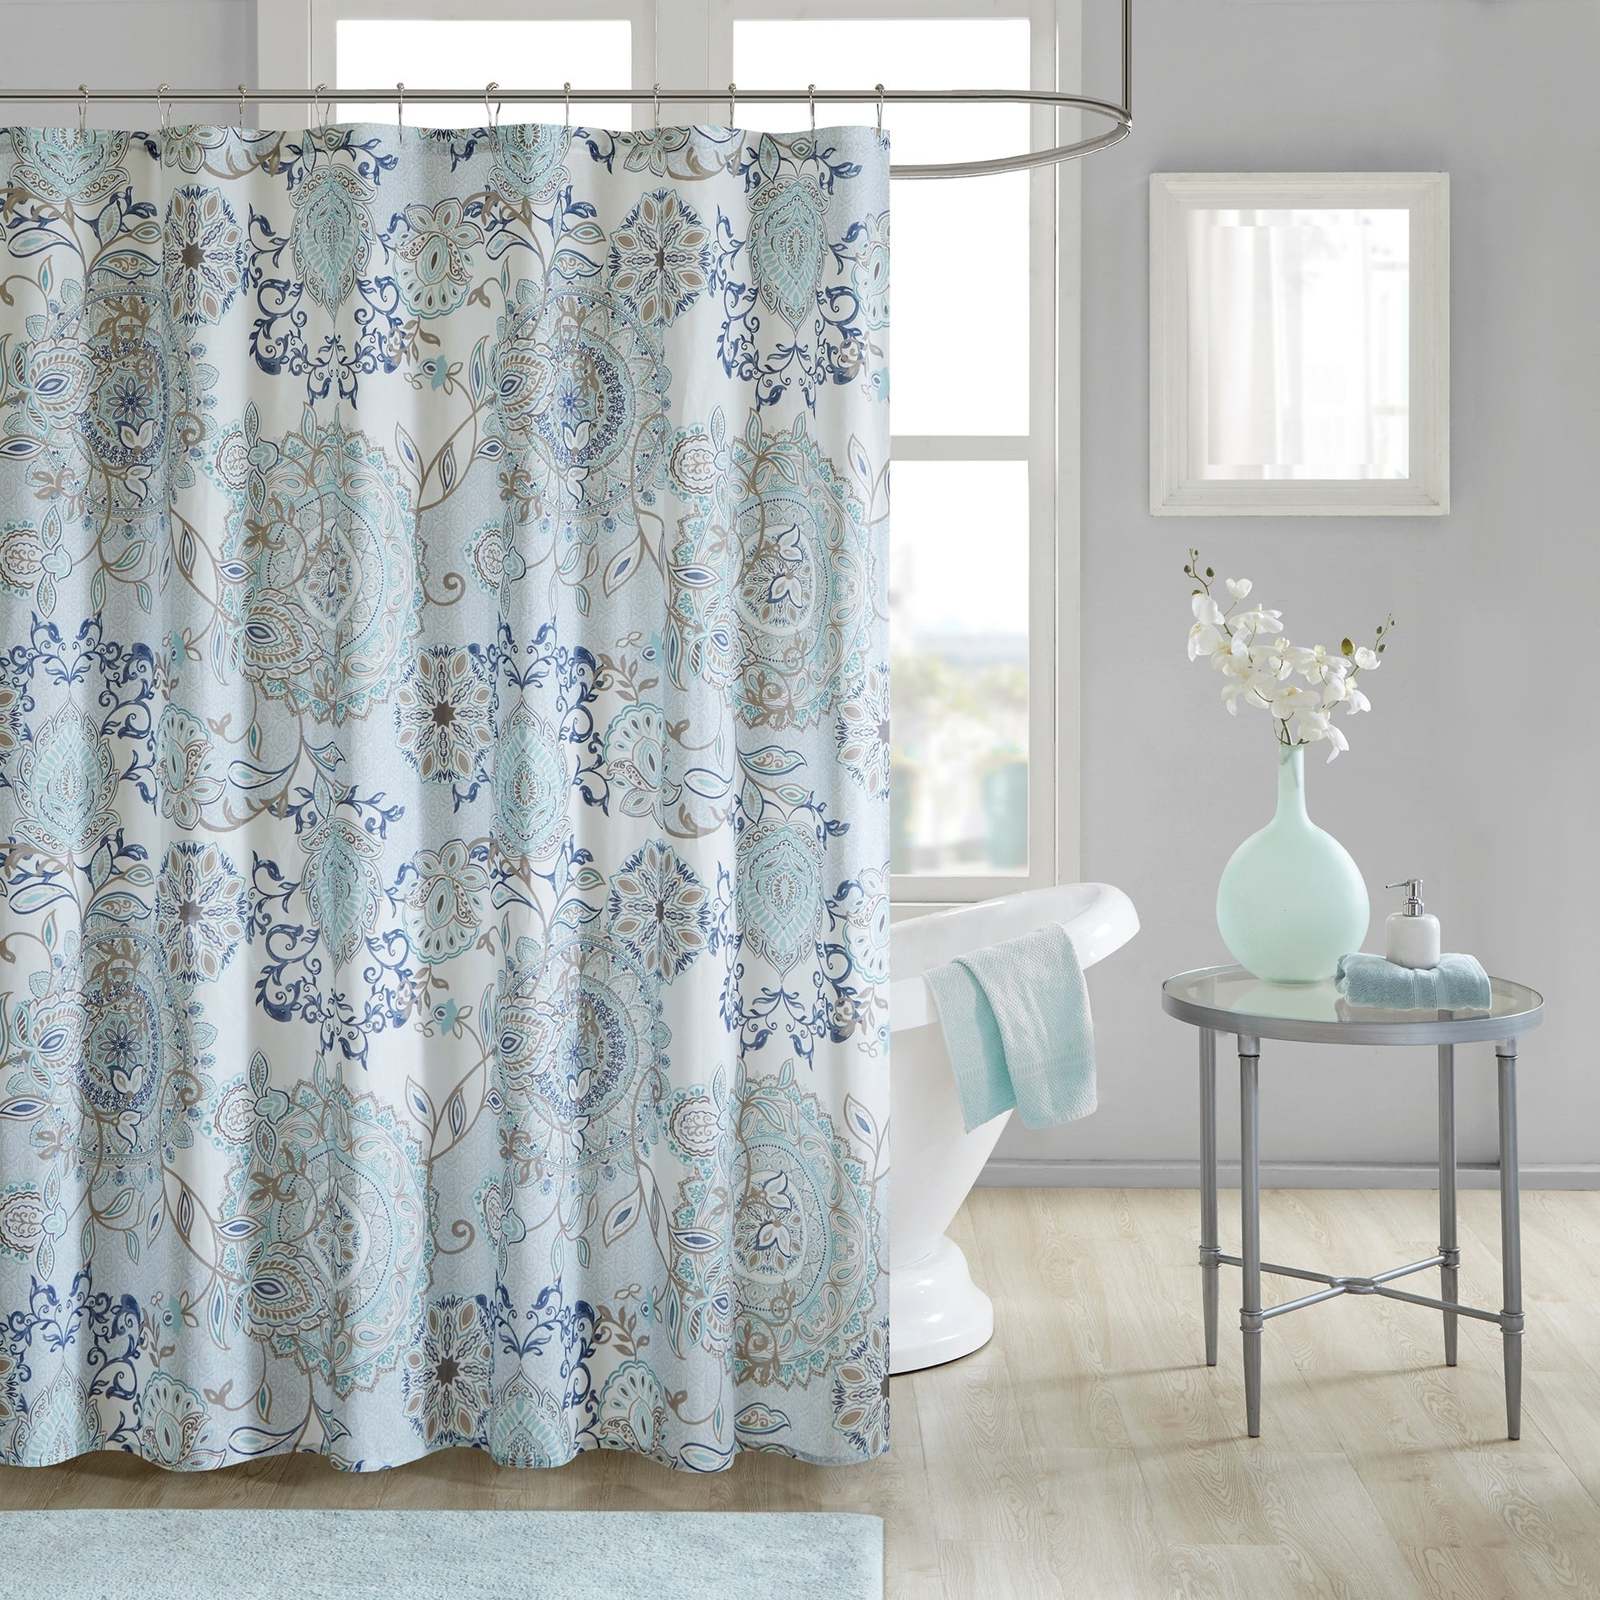 Create a Feminine Look With a Floral Shower Curtain